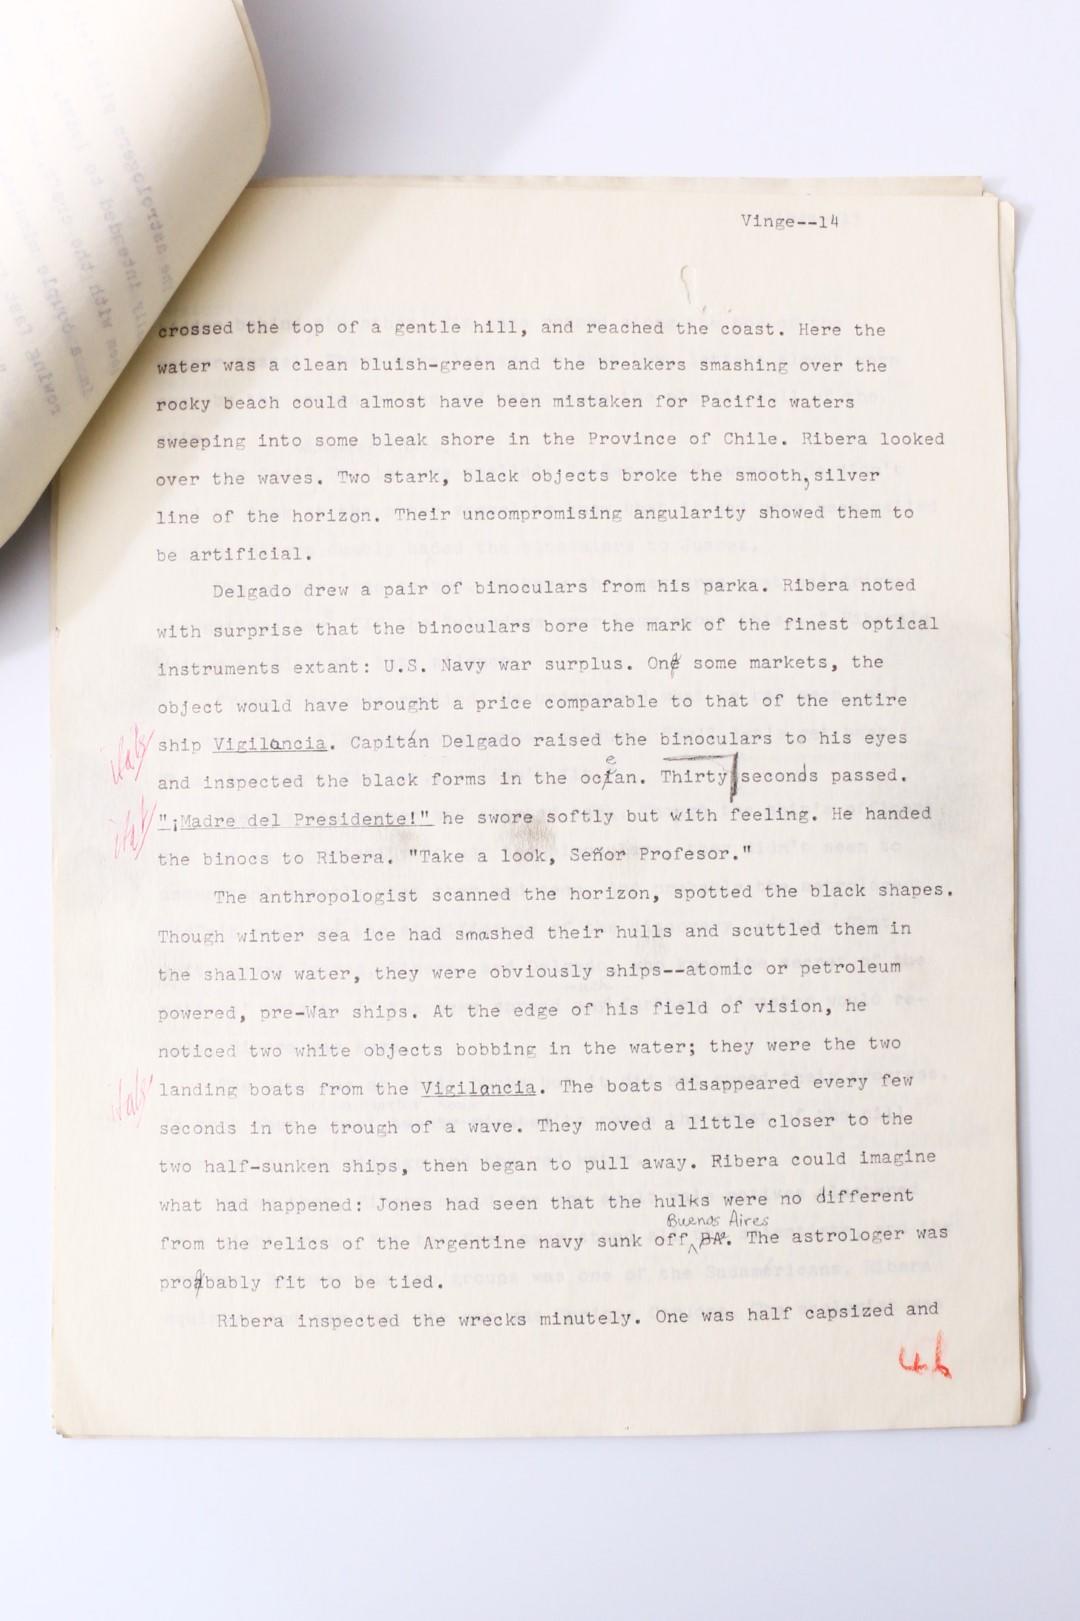 Vernor Vinge - apartness Typescript - None, nd [~1965], Manuscript.